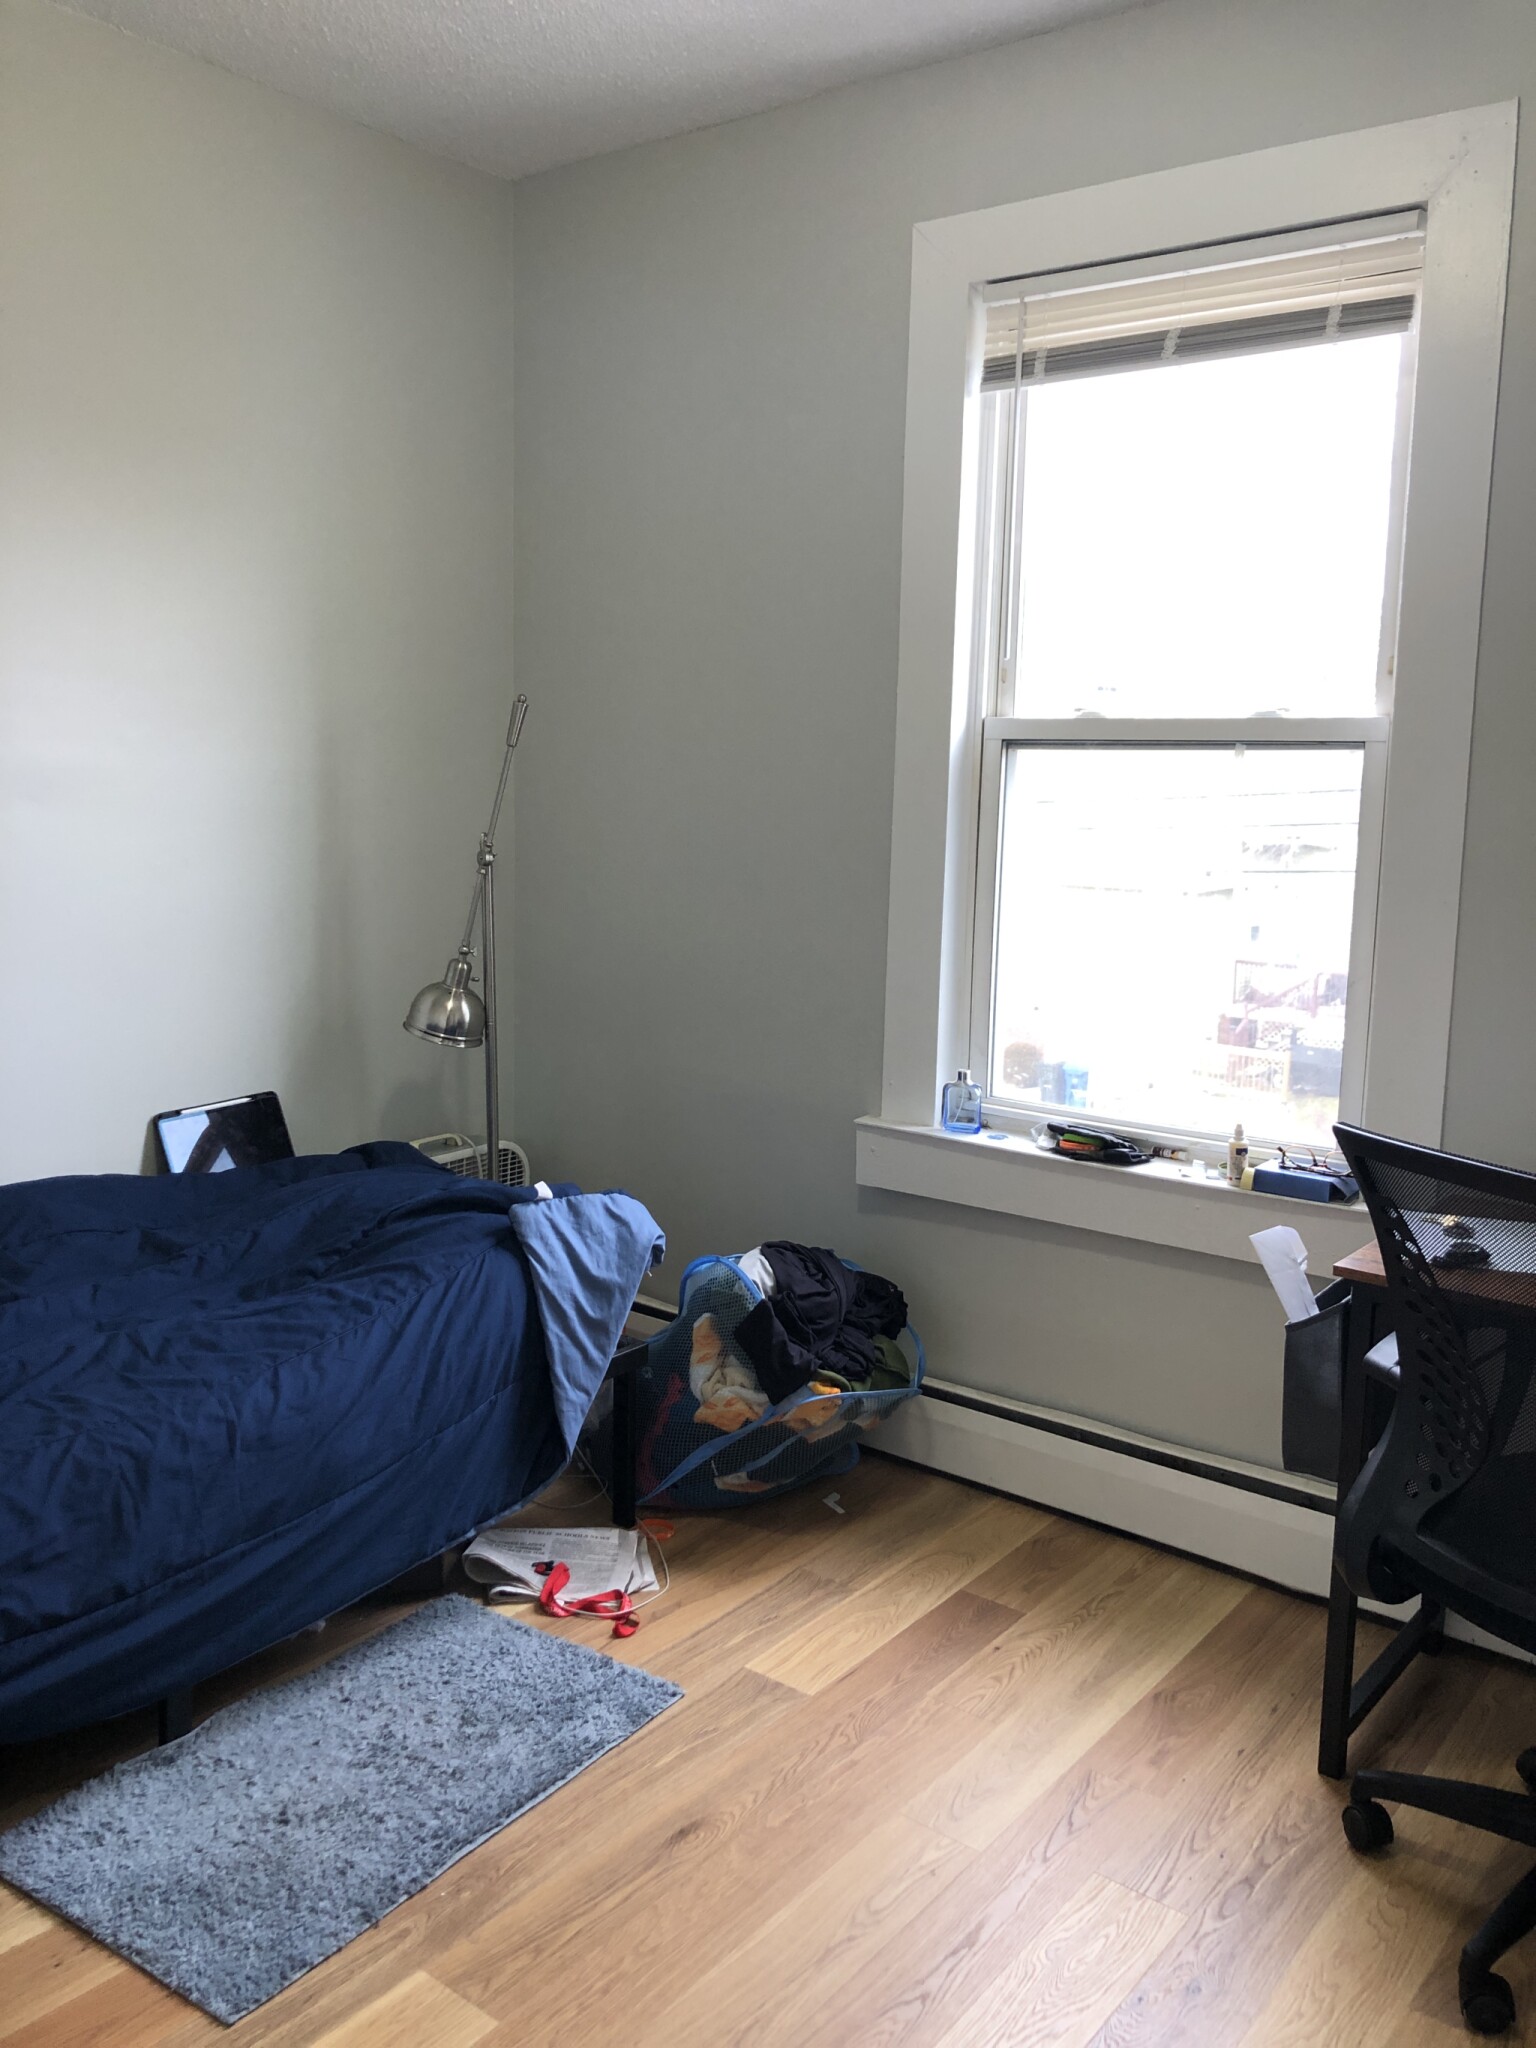 Photos of apartment on Oakland St.,Boston MA 02119